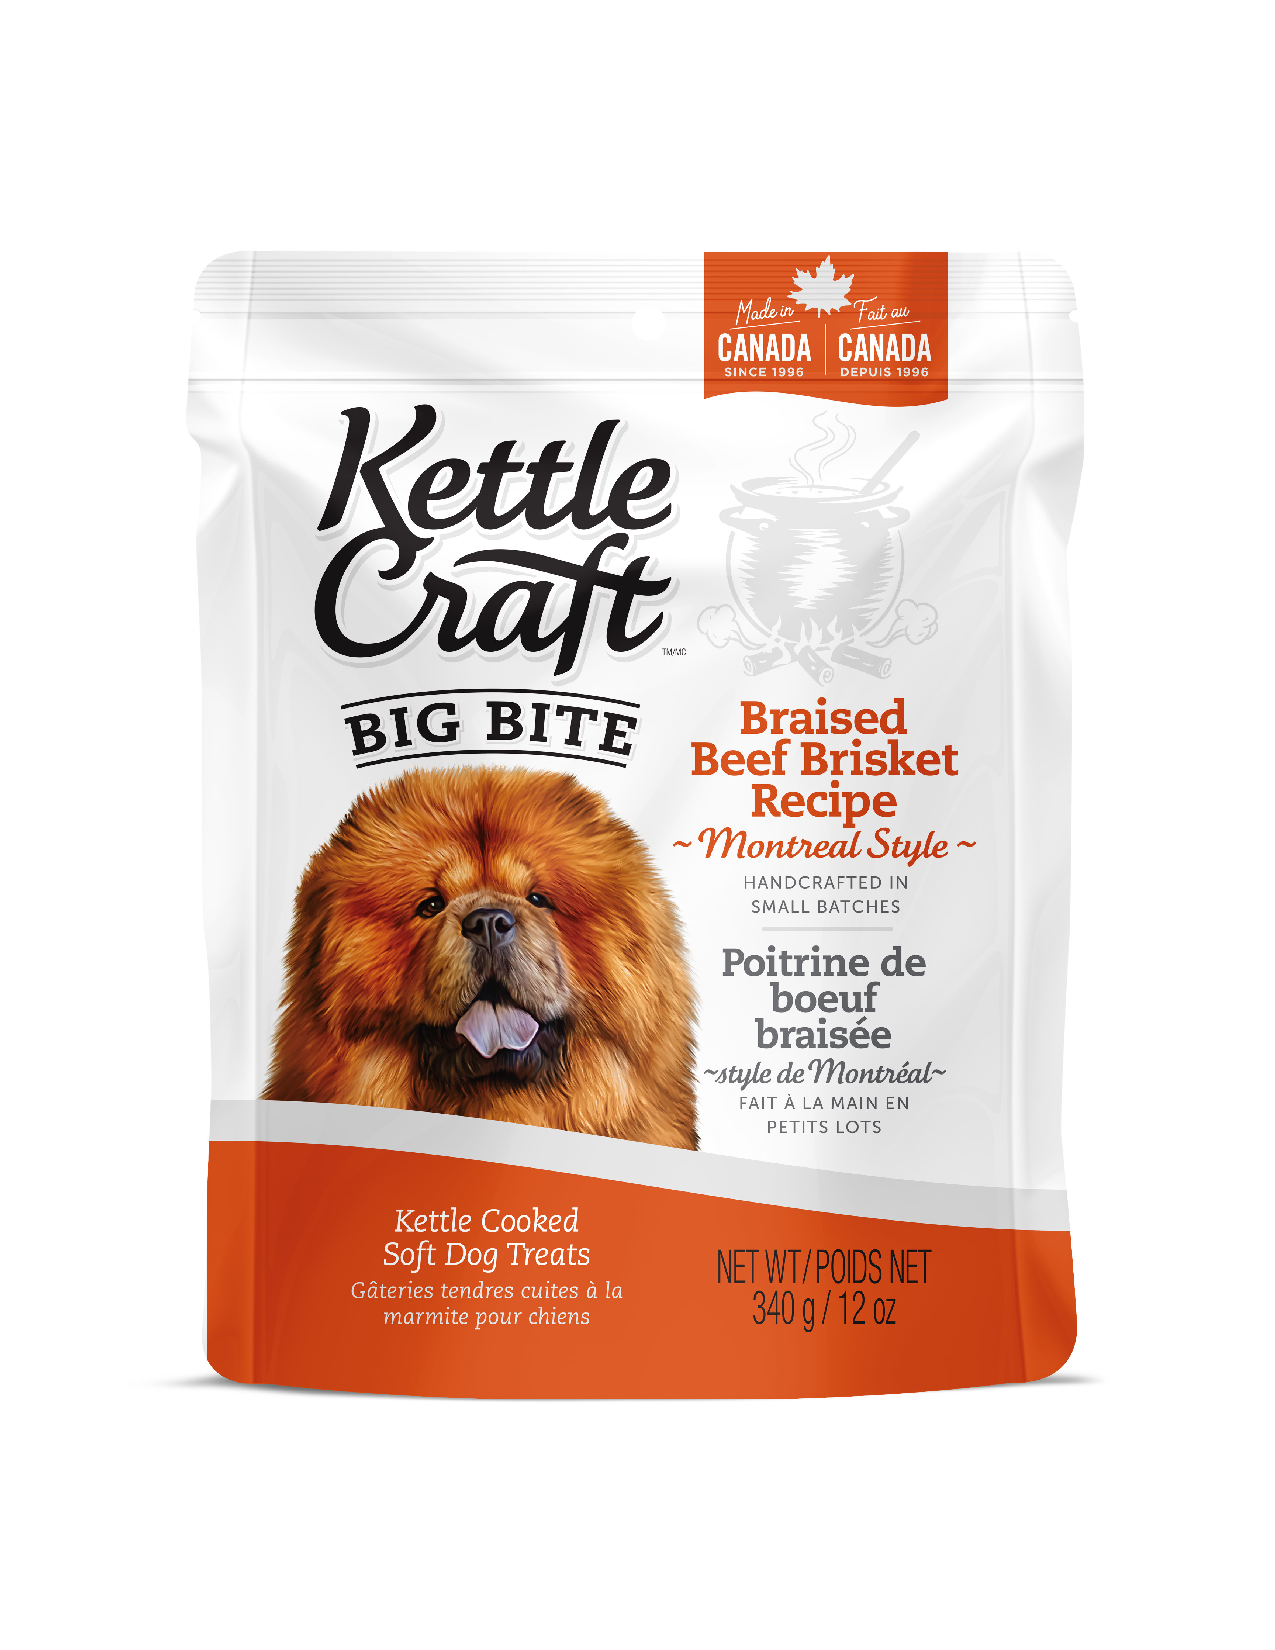 Kettle Craft Dog Treats Montreal Style Braised Beef Brisket